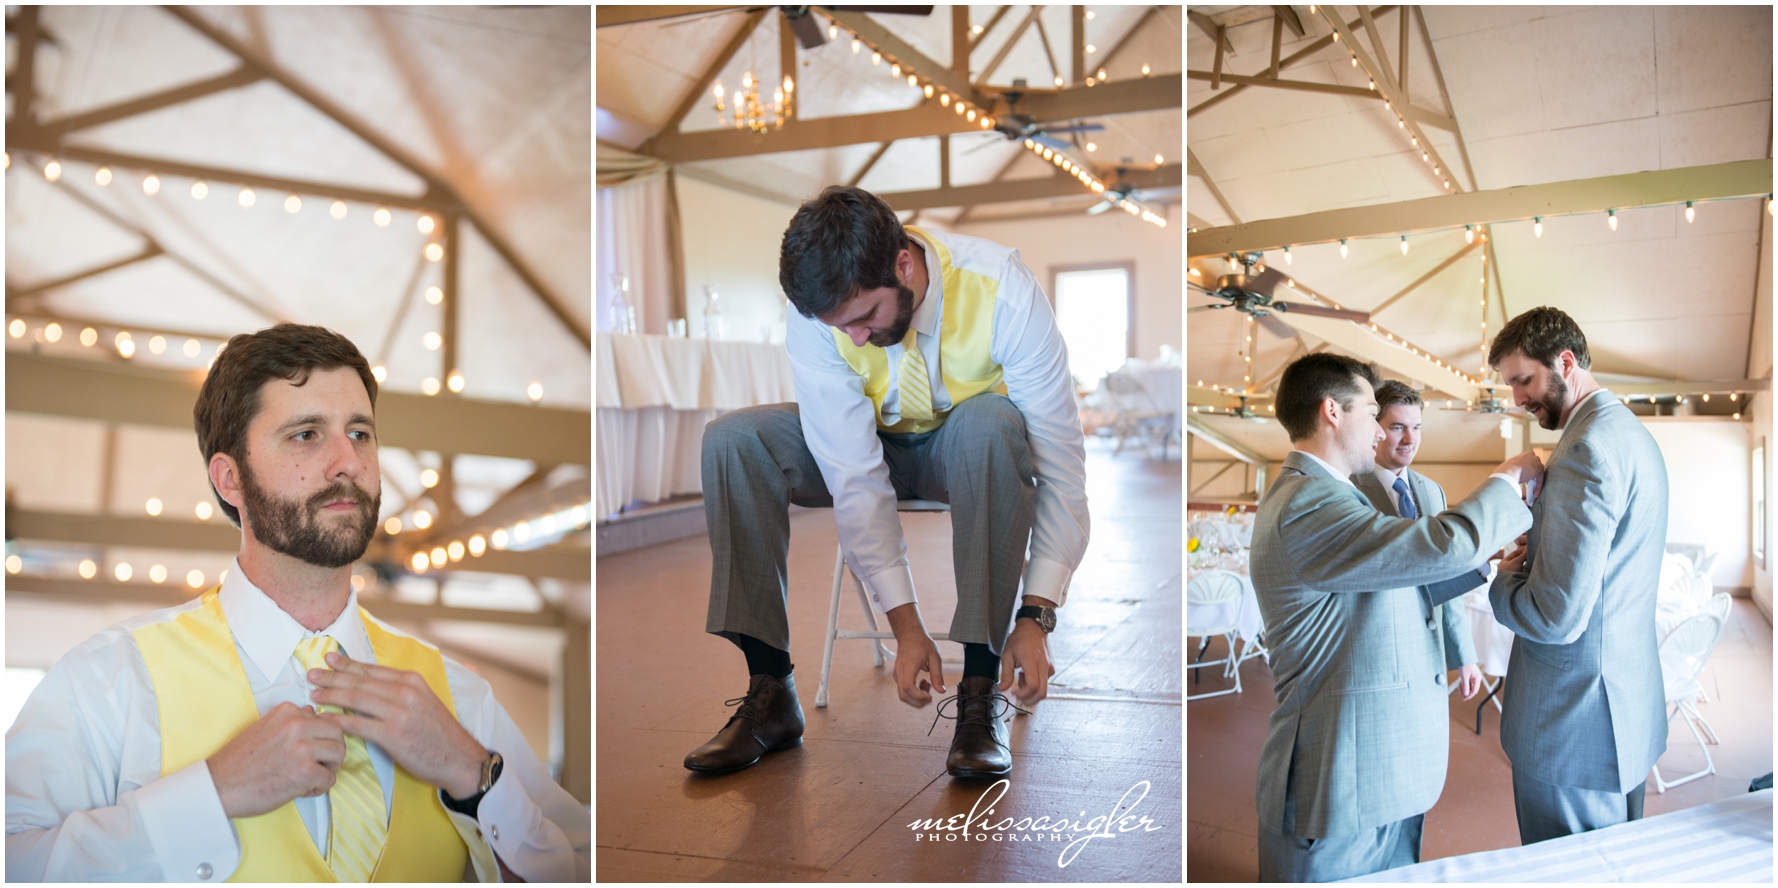 Groom getting ready at Victorian Veranda by Lawrence Kansas wedding photographer Melissa Sigler